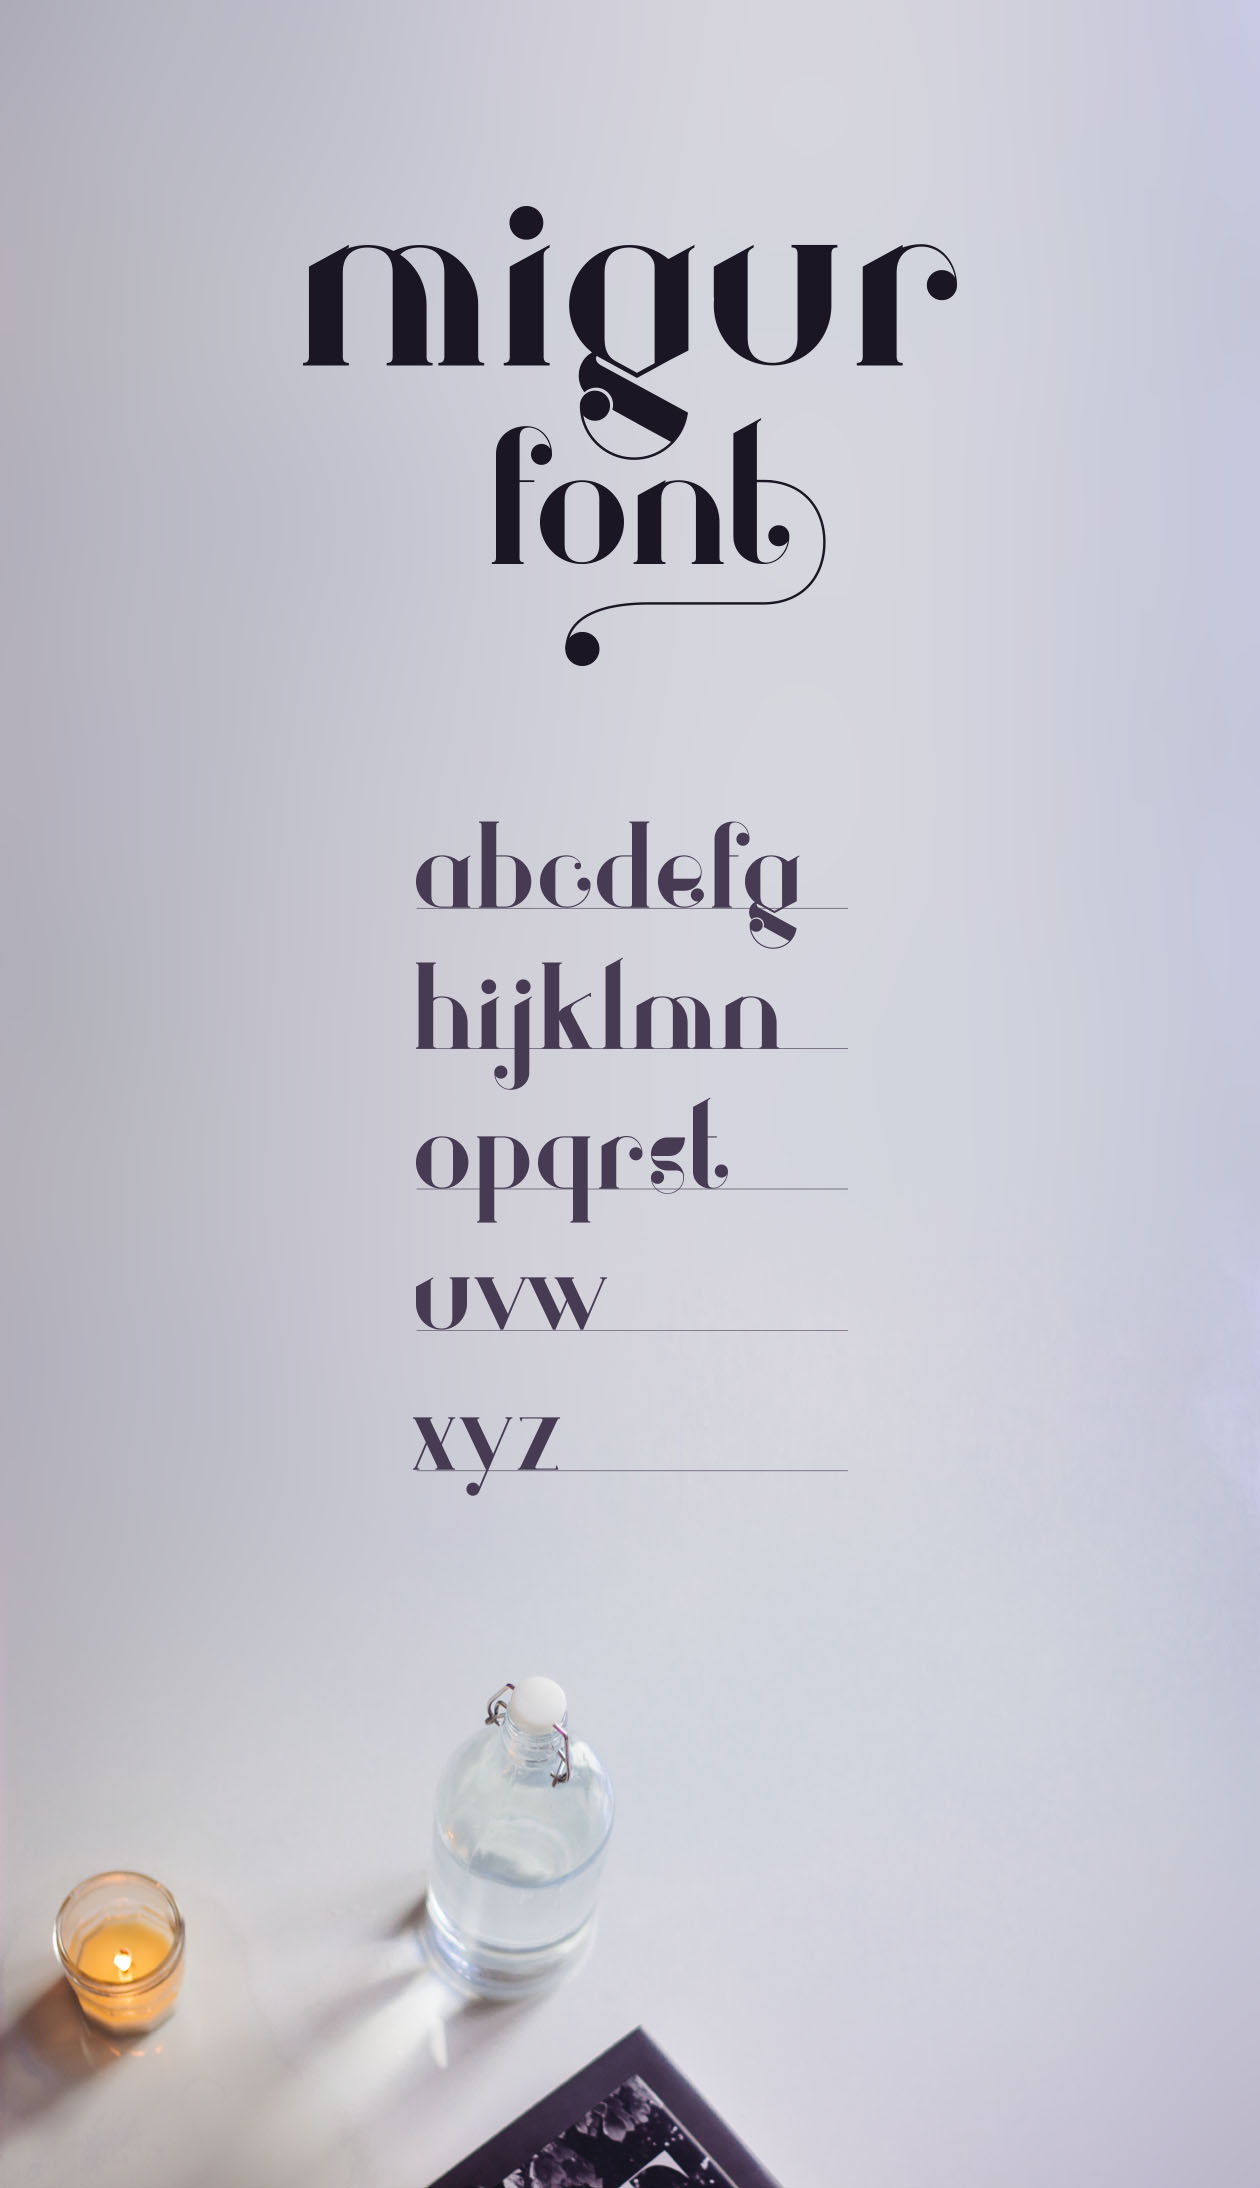 Behance网站推荐最佳英文排版印刷字体素材库精选之一 Migur Serif Font插图(1)